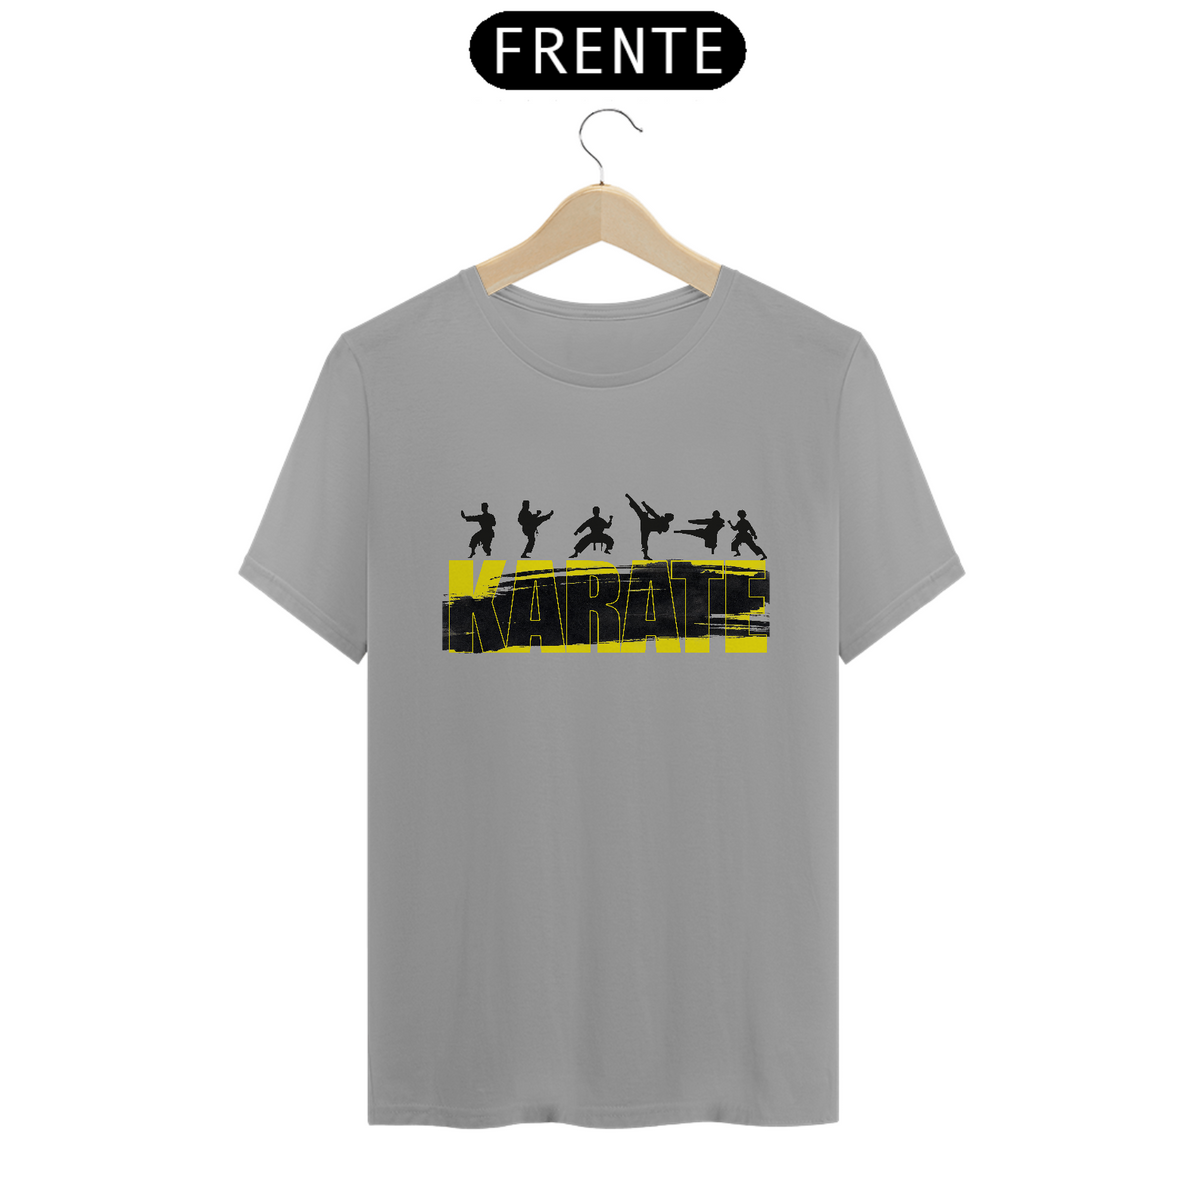 Nome do produto: Camiseta karate 1